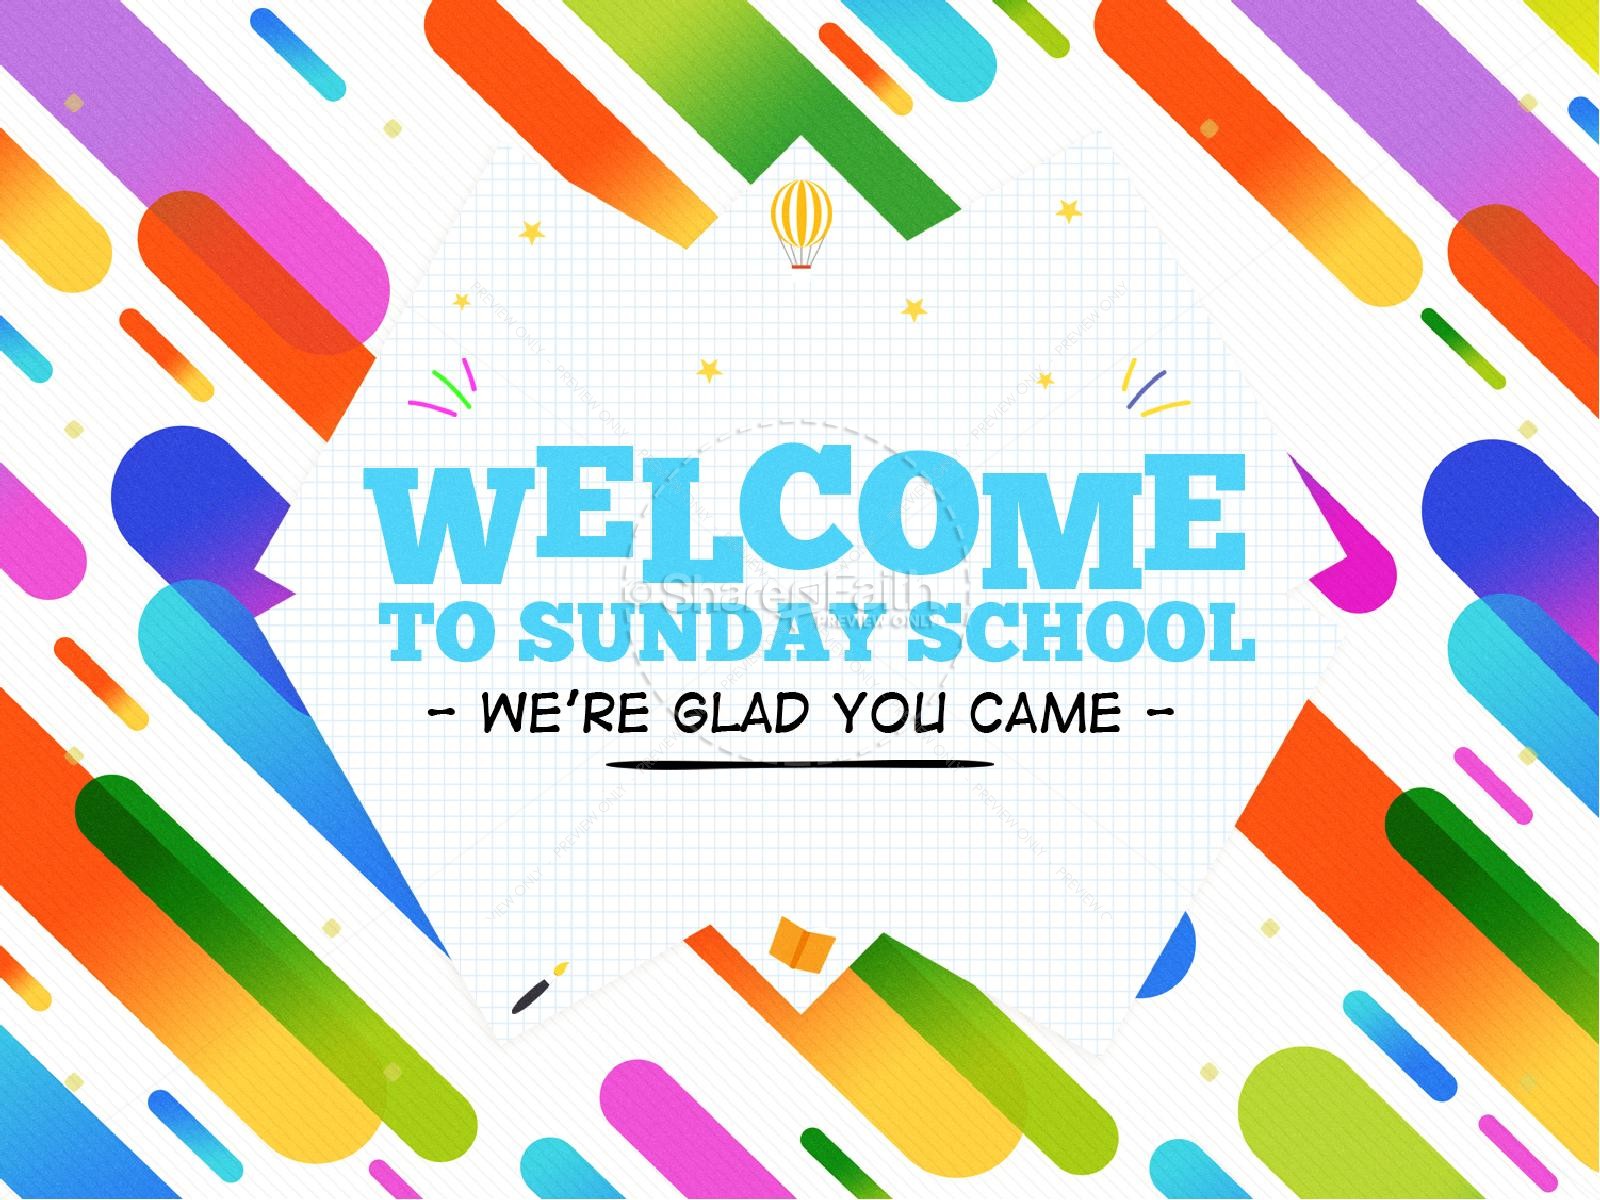 Sunday School Jelly Bean Children's Church PowerPoint Thumbnail 2